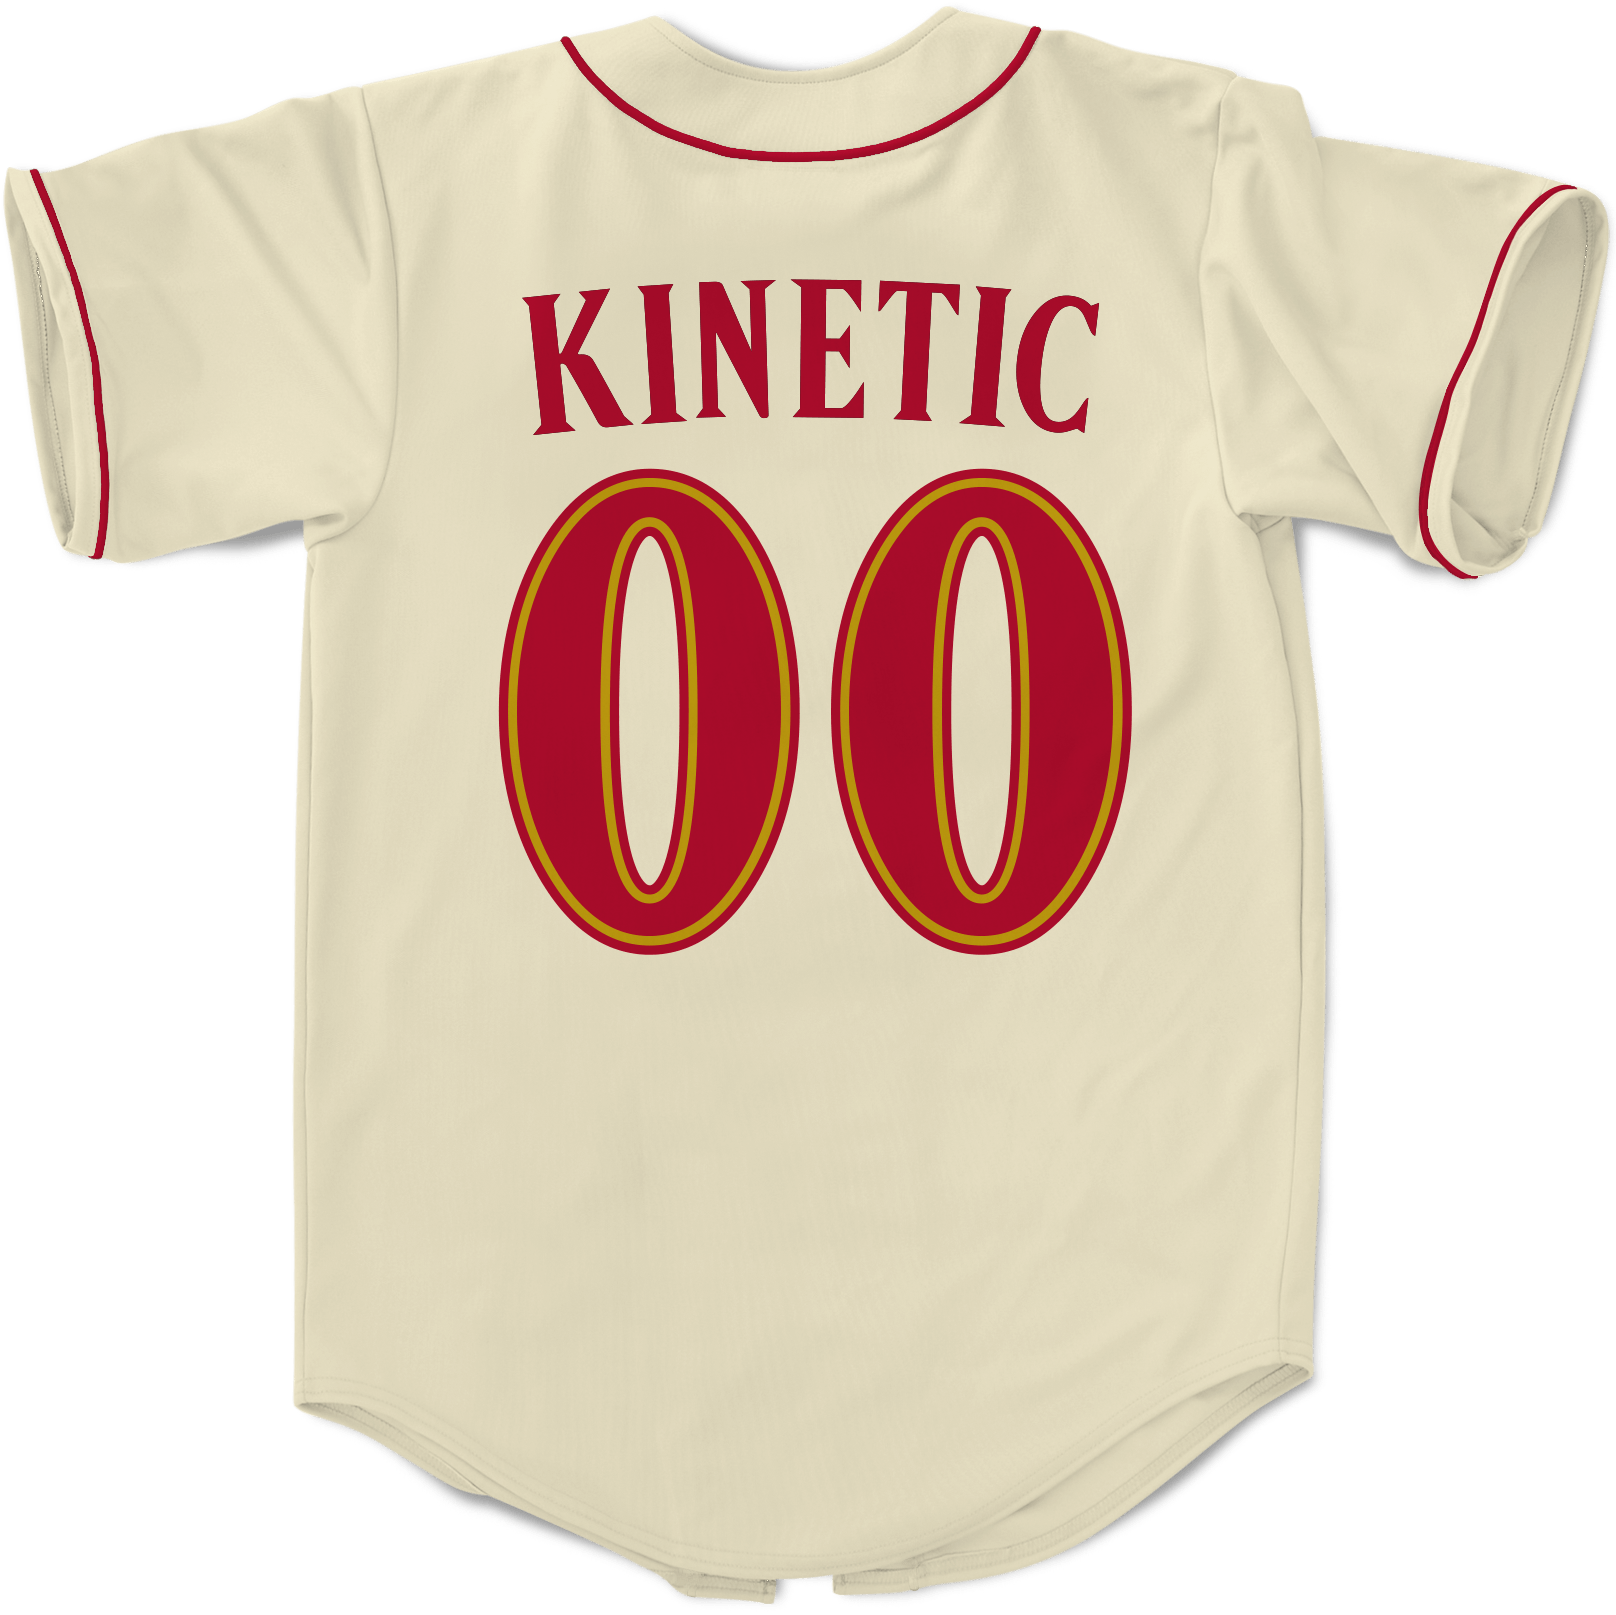 Kappa Sigma - Cream Baseball Jersey Premium Baseball Kinetic Society LLC 